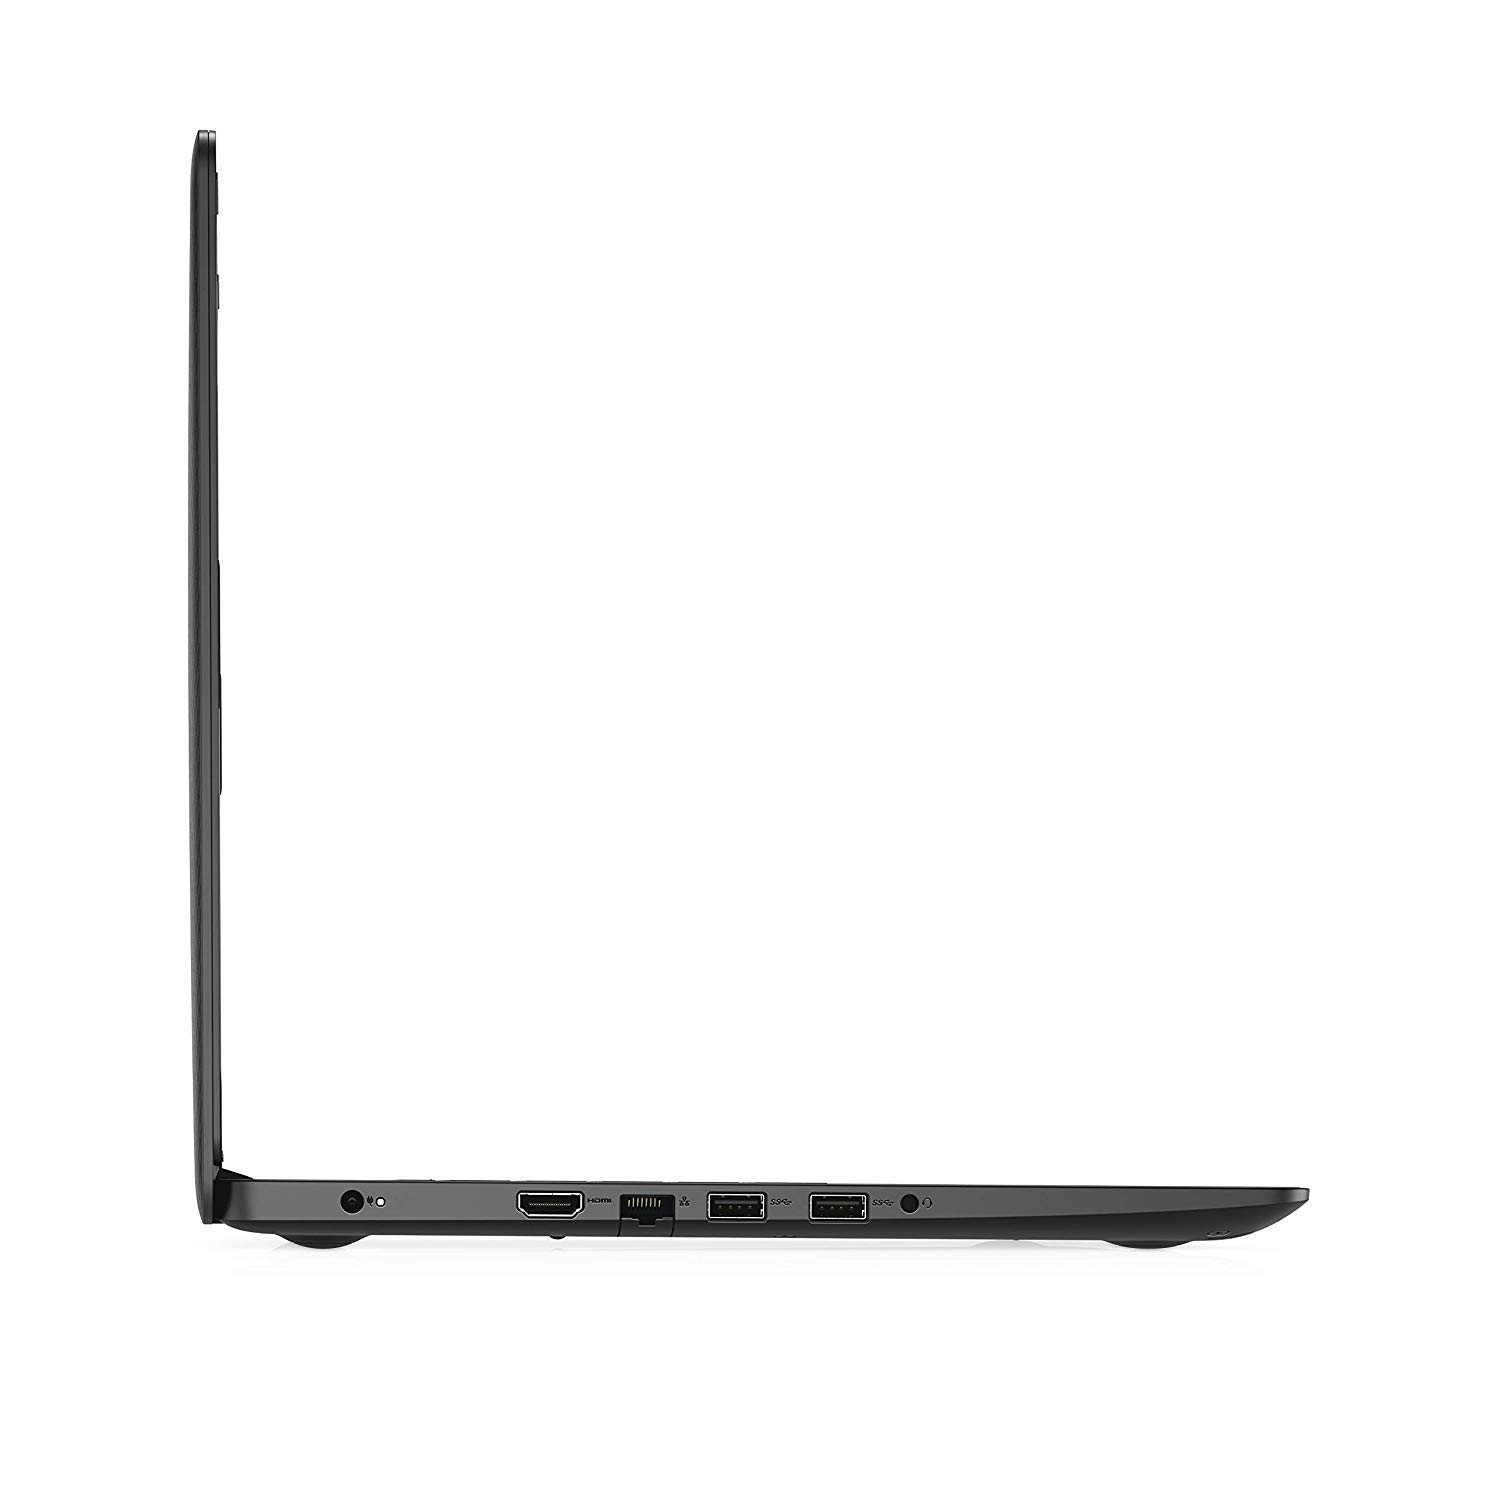 2020 Newest Dell Inspiron 15 3000 Series Laptop, 15.6" Full HD Non-Touchscreen, 10th Gen Intel Core i5-1035G1 Processor, 8GB RAM, 256GB PCIe SSD, Webcam, HDMI, Wi-Fi, Bluetooth, Windows 10 Home, Black